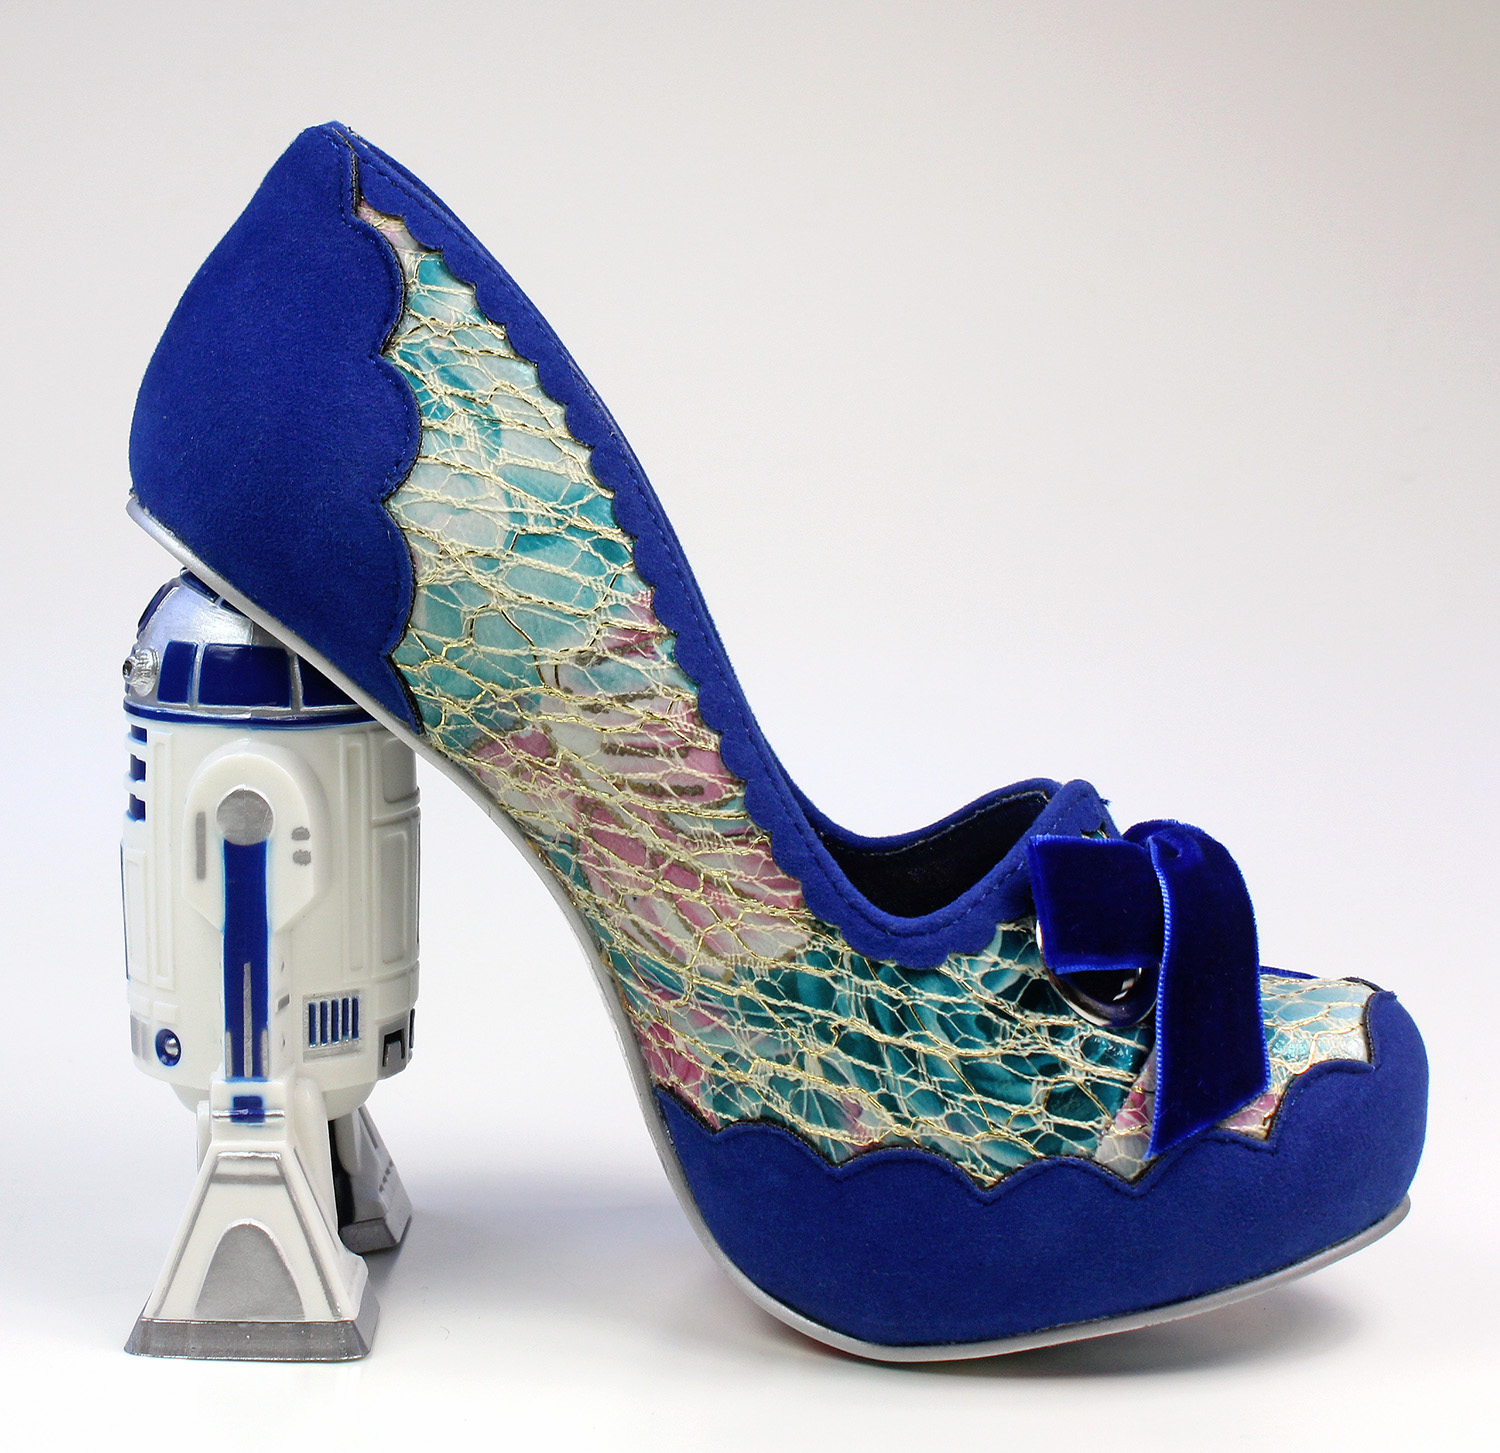 Irregular Choice x Star Wars - R2-D2 shoes